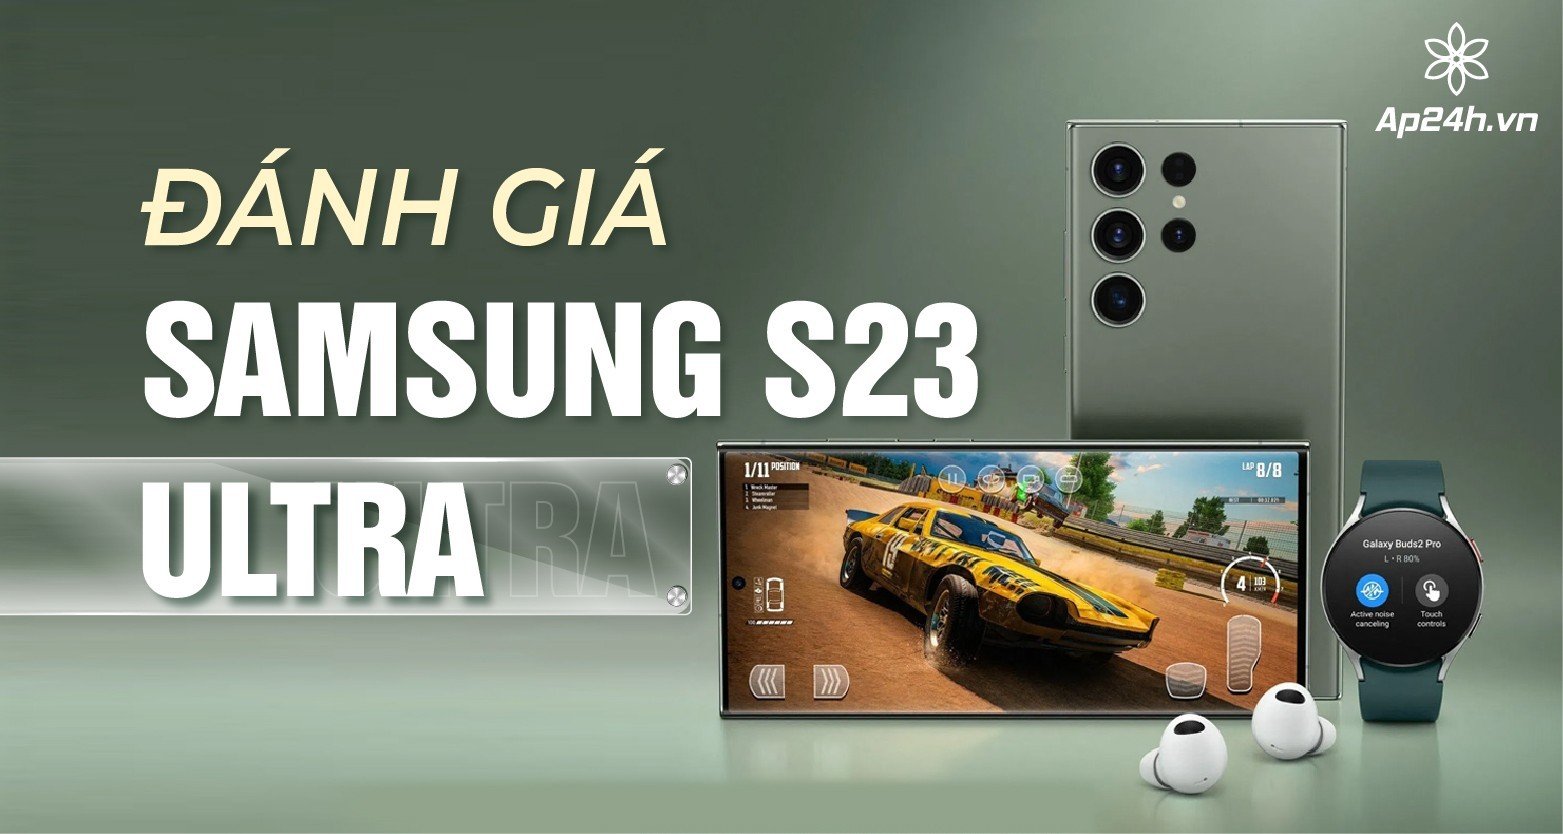  Đánh giá Samsung S23 Ultra